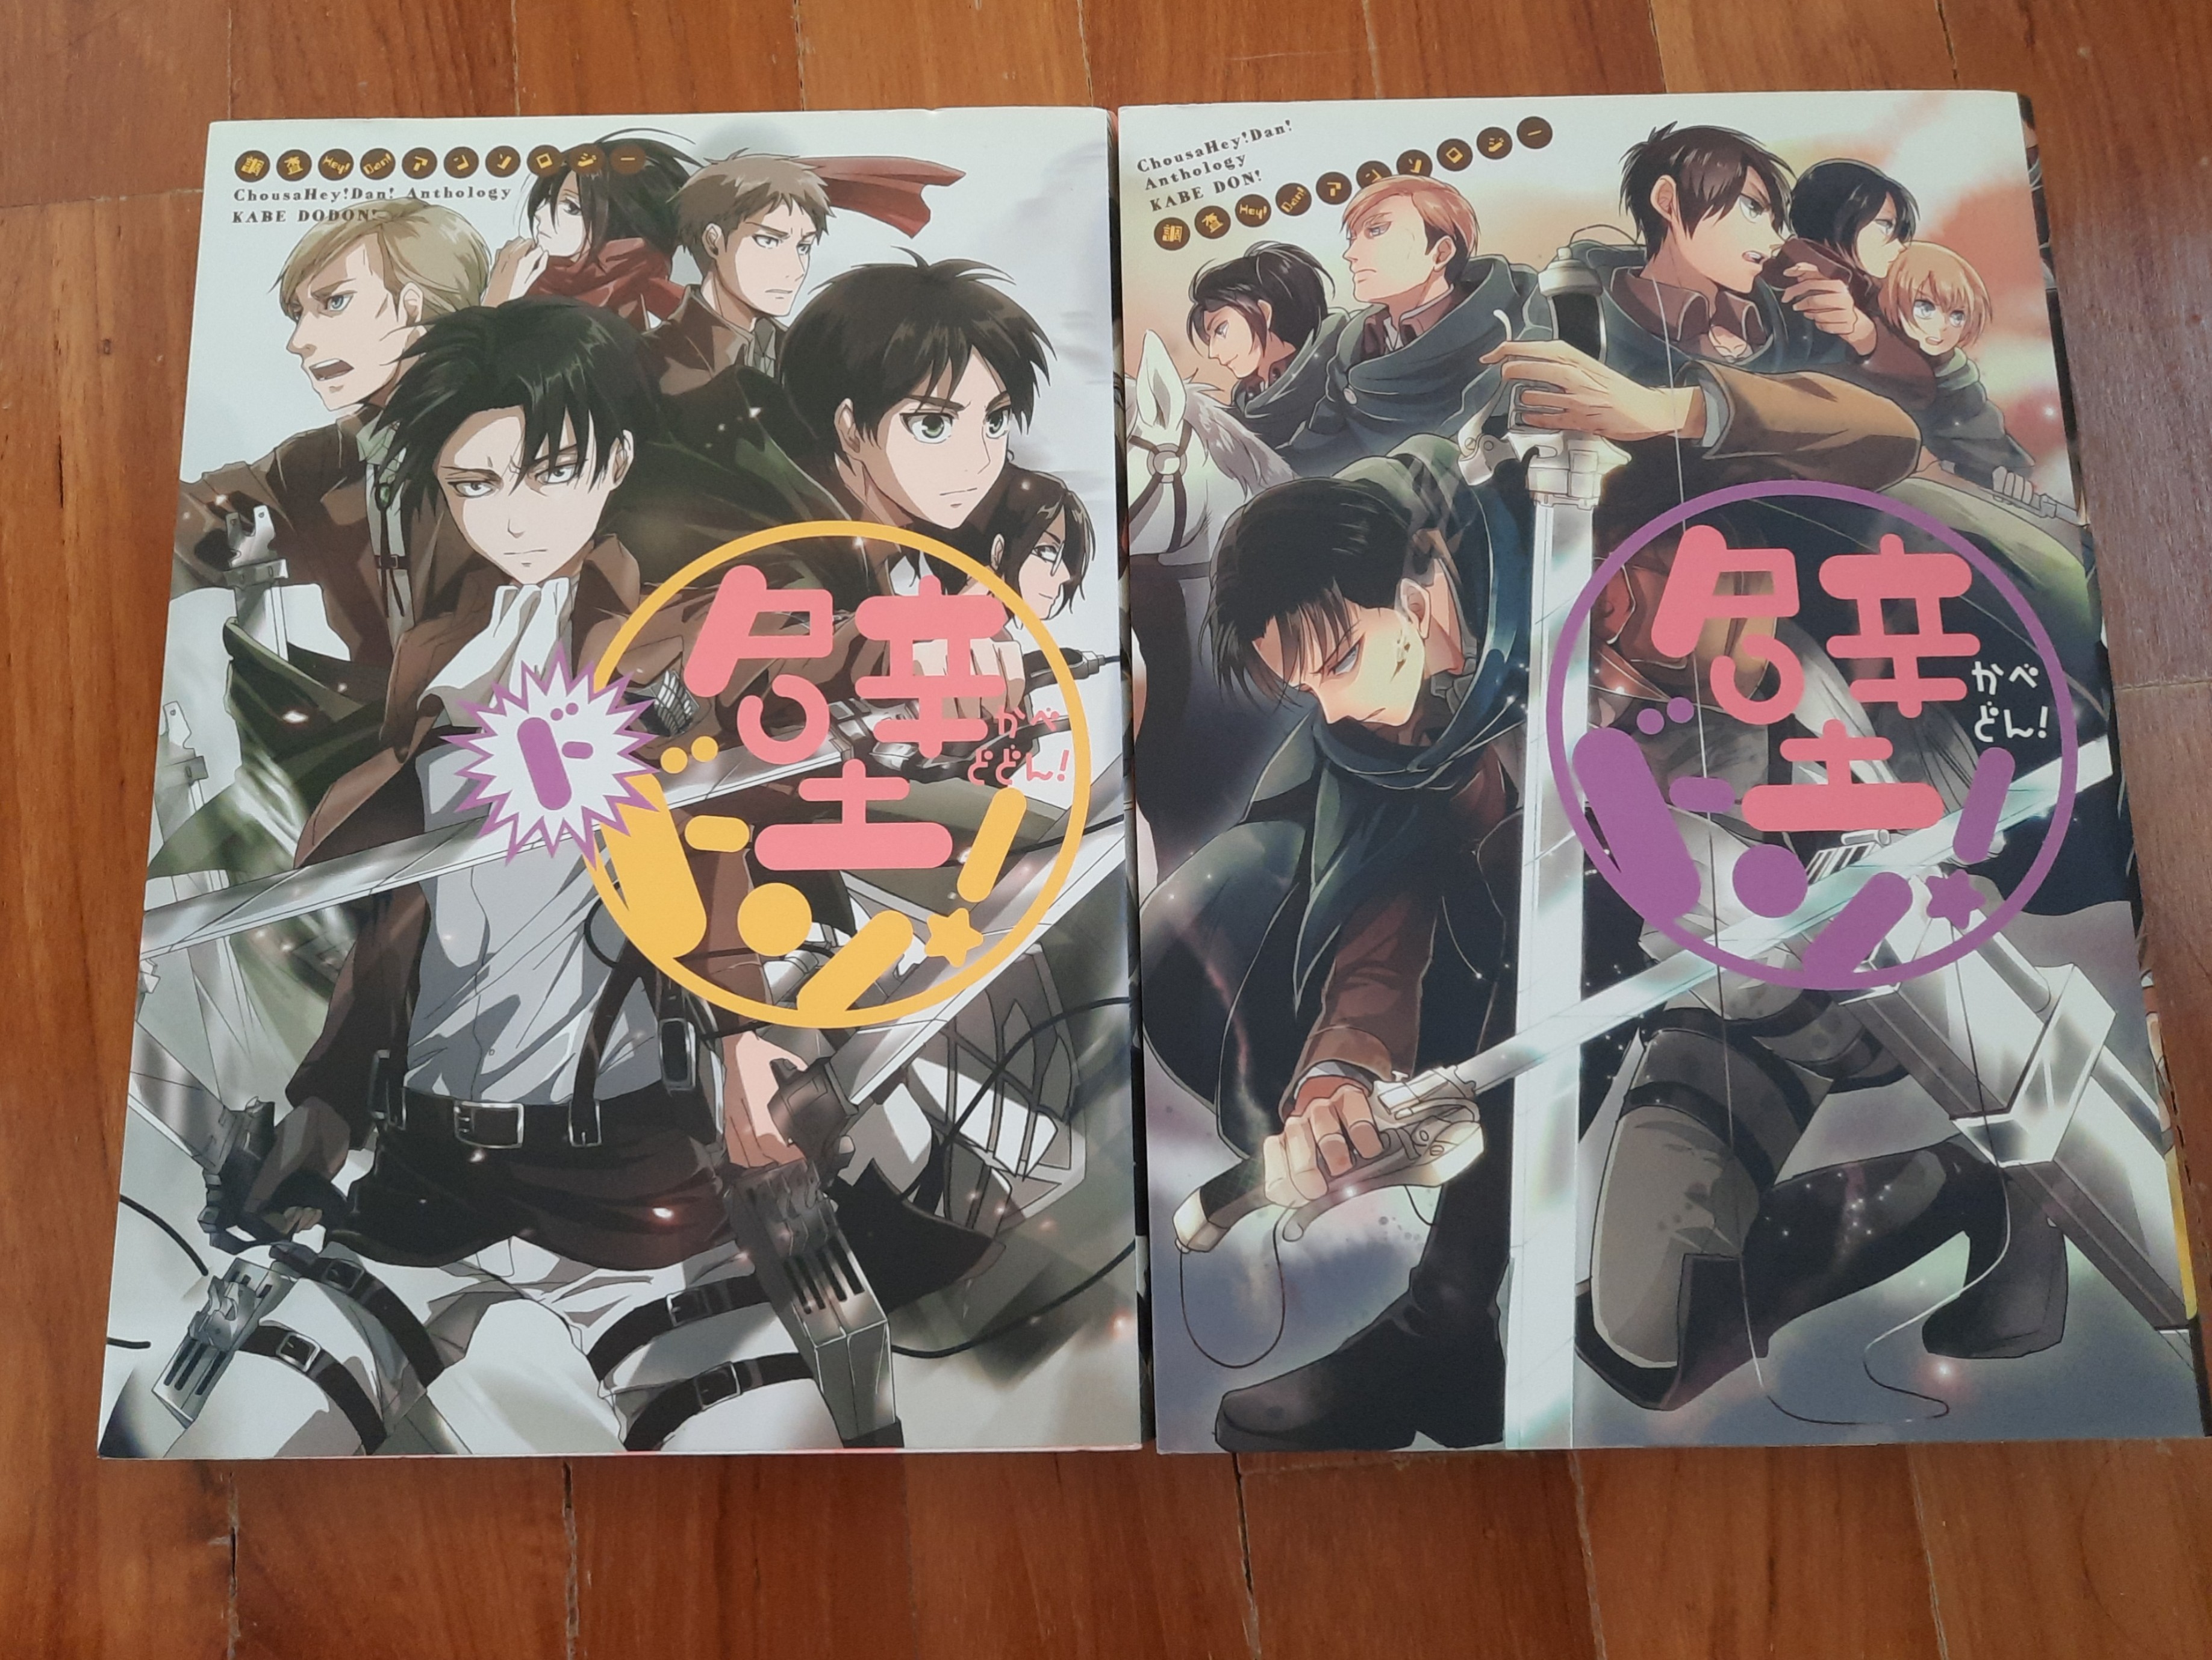 Attack on Titan set of 2 books anthology comics doujinshi anime